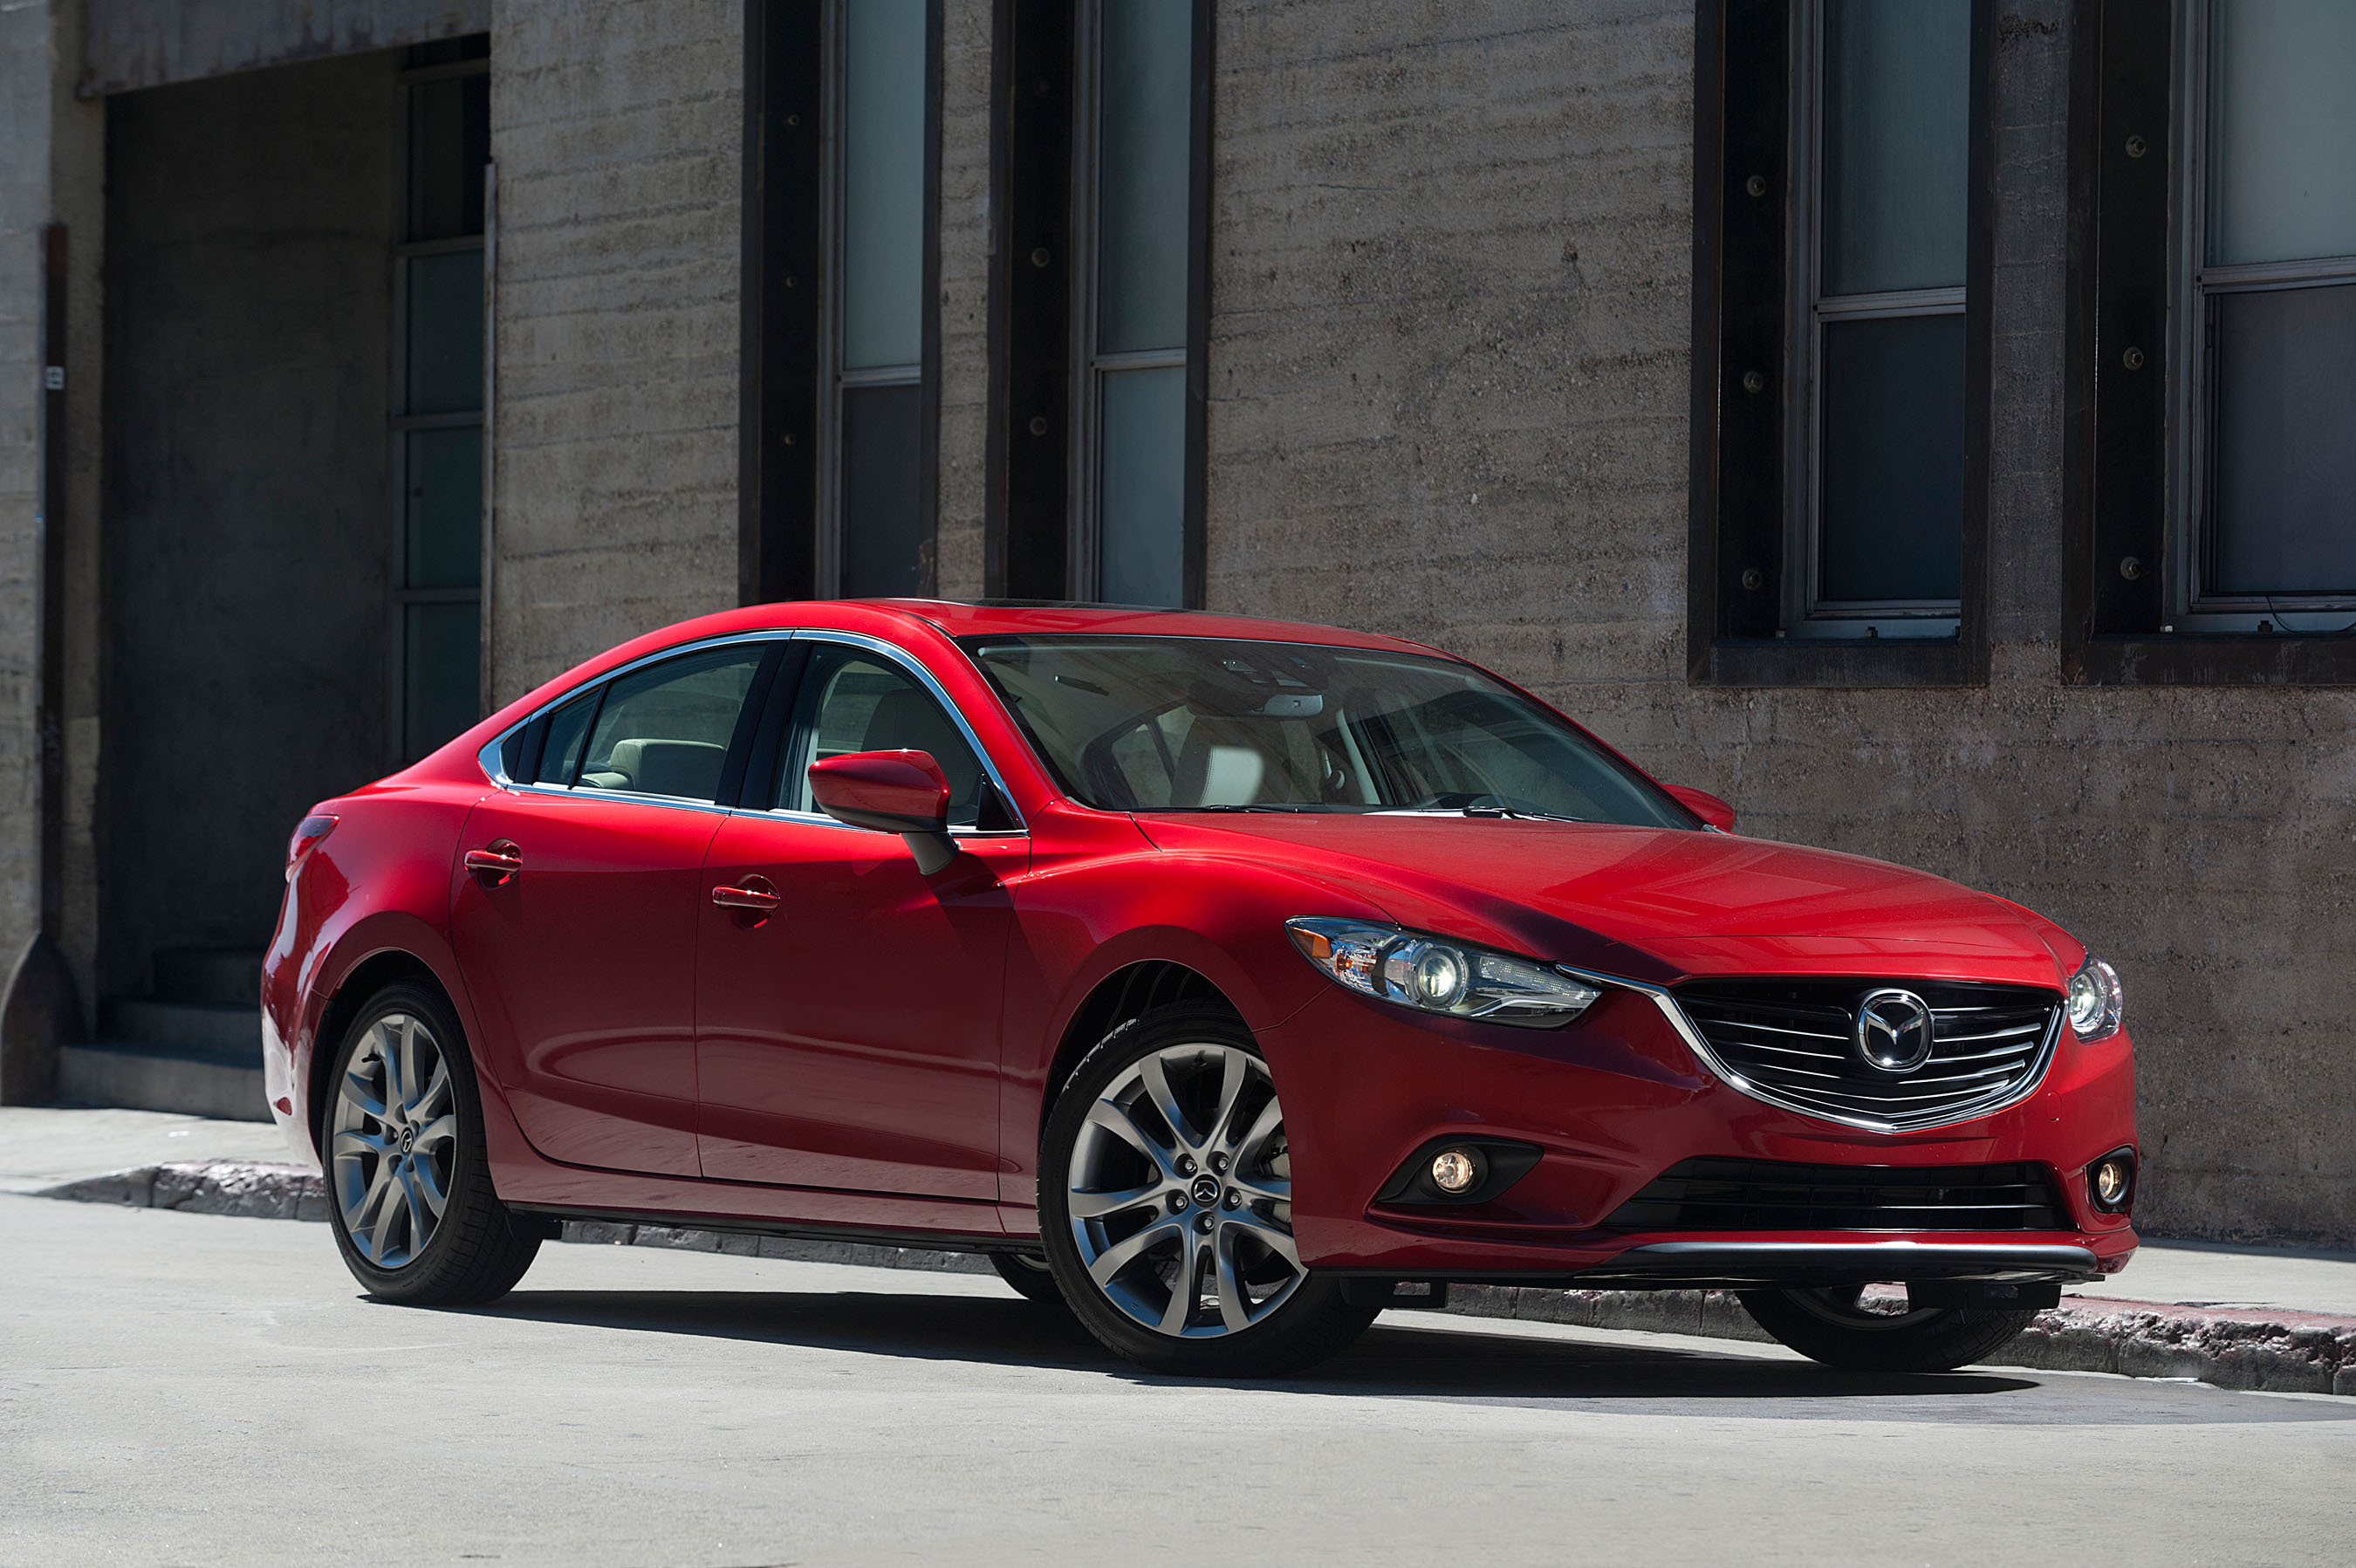 2014 Mazda6 Named "Car of the Year" by Popular Mechanics. (PRNewsFoto/Mazda North American Operations) (PRNewsFoto/MAZDA NORTH AMERICAN OPERATIONS)